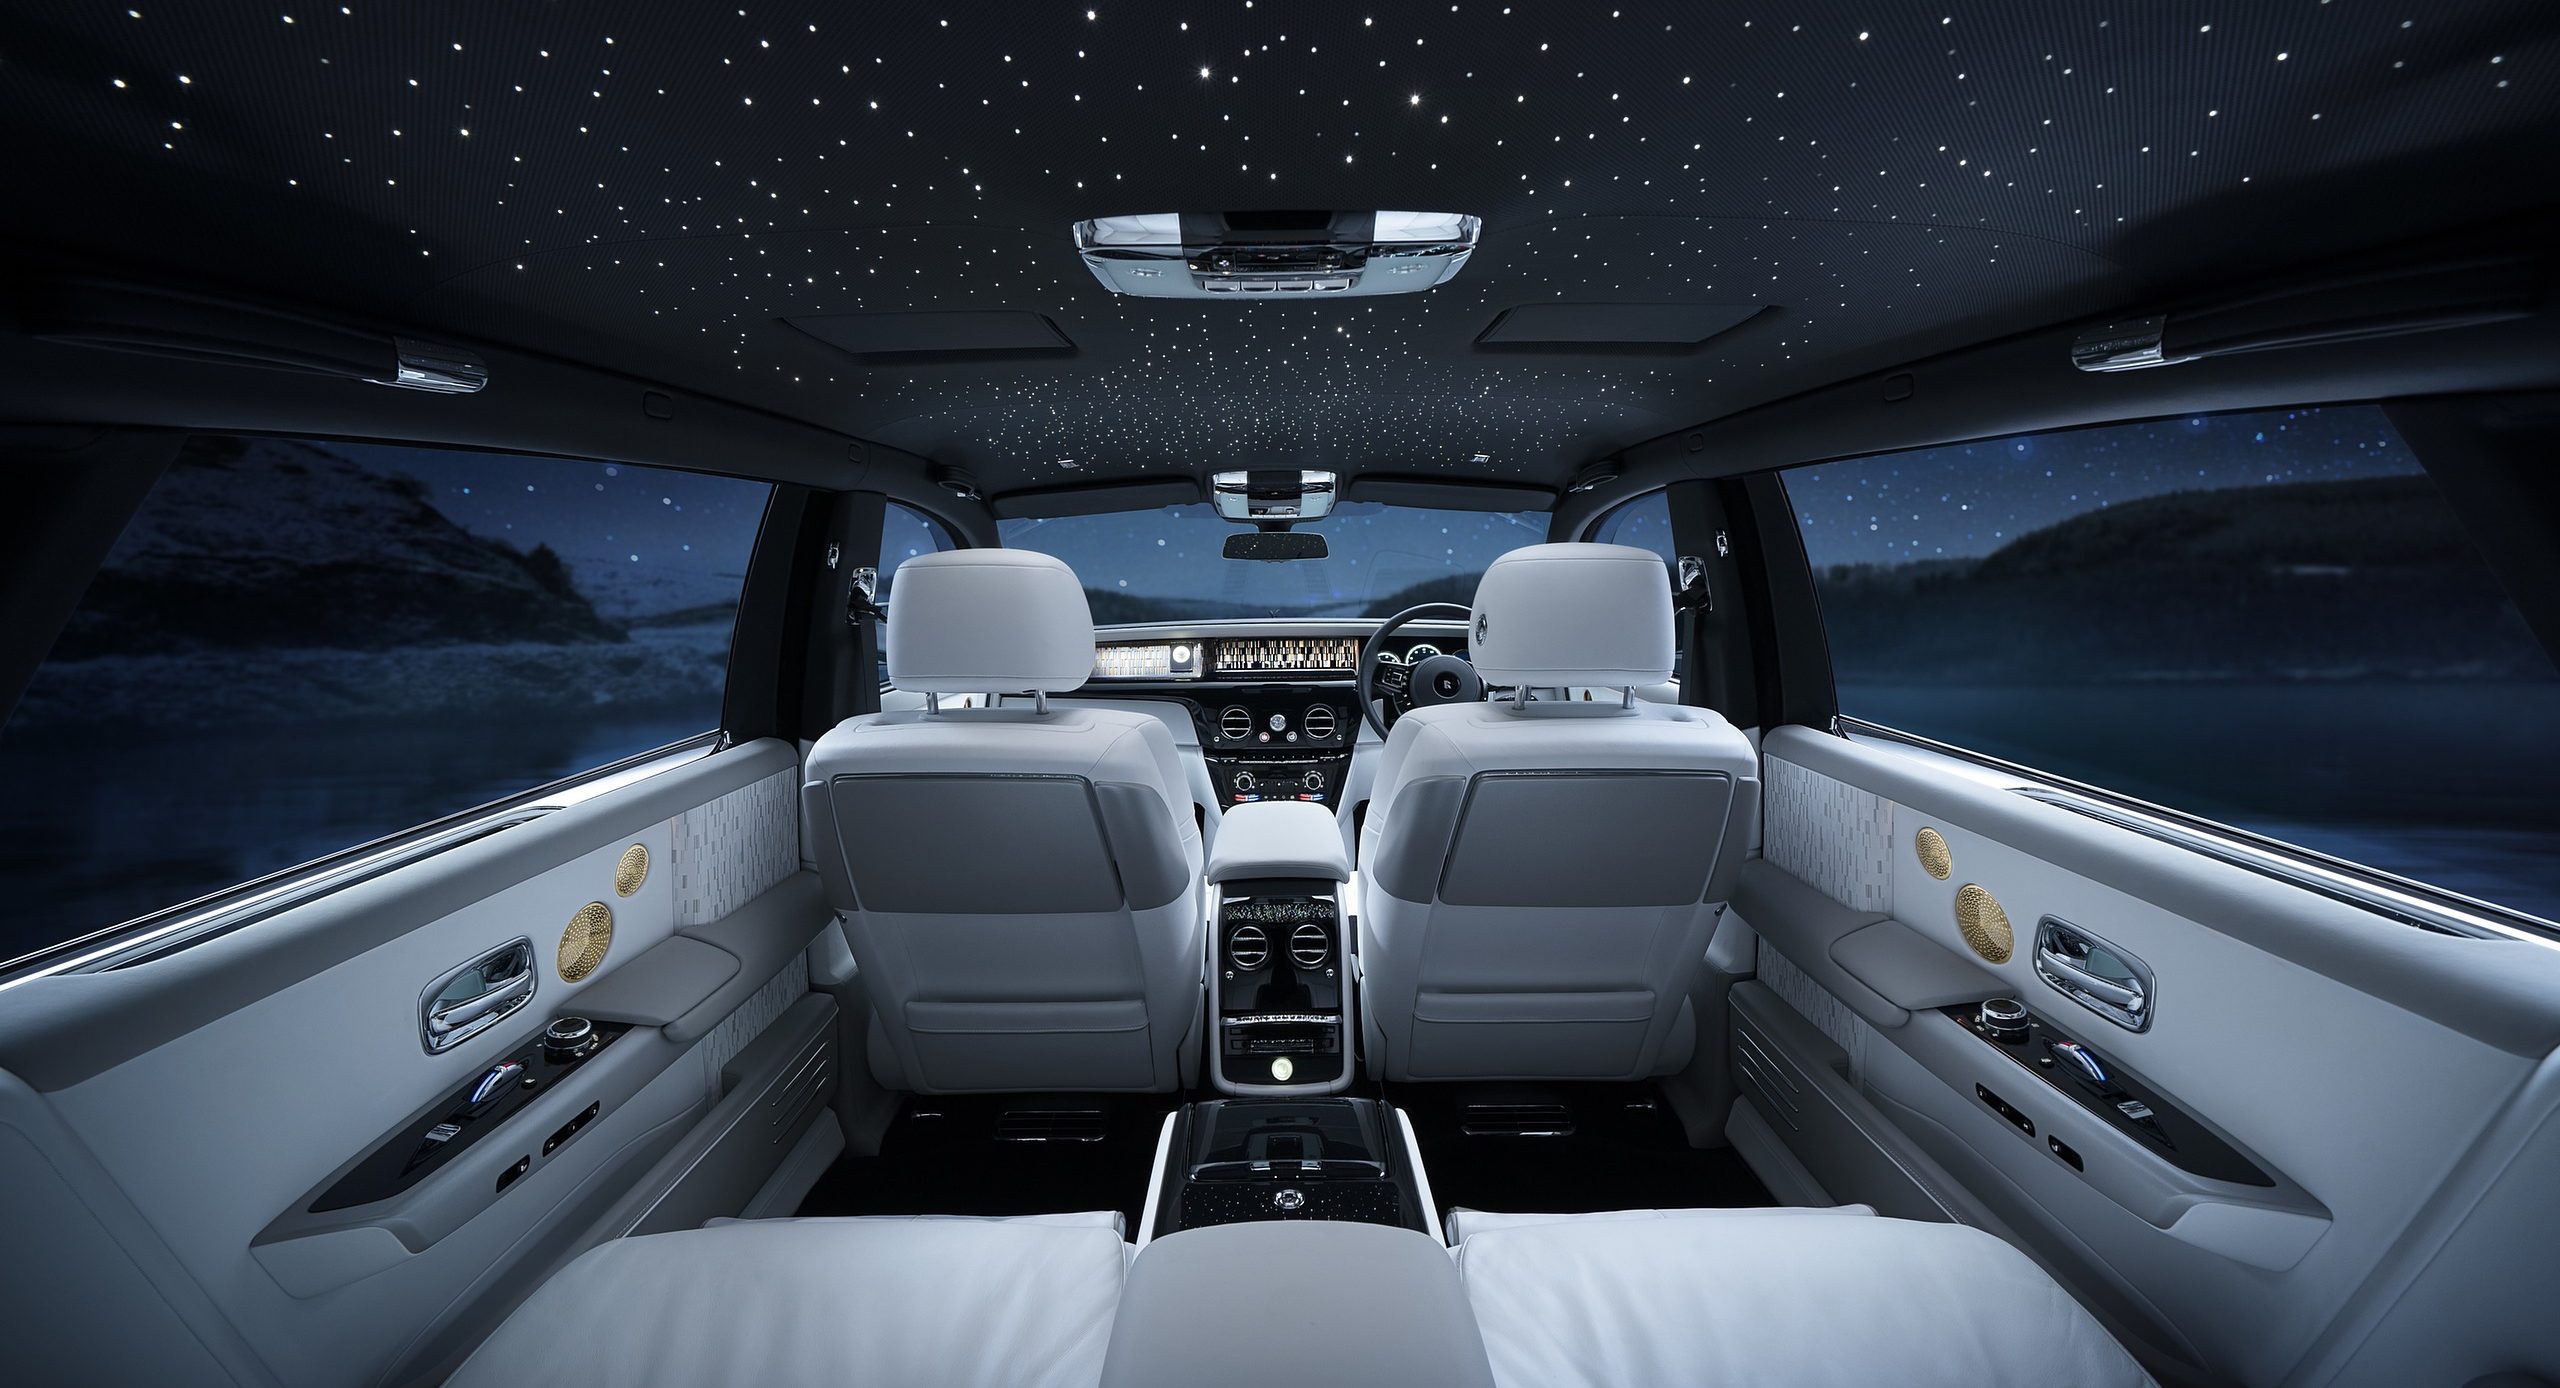 Rolls Royce Interior Light design idea